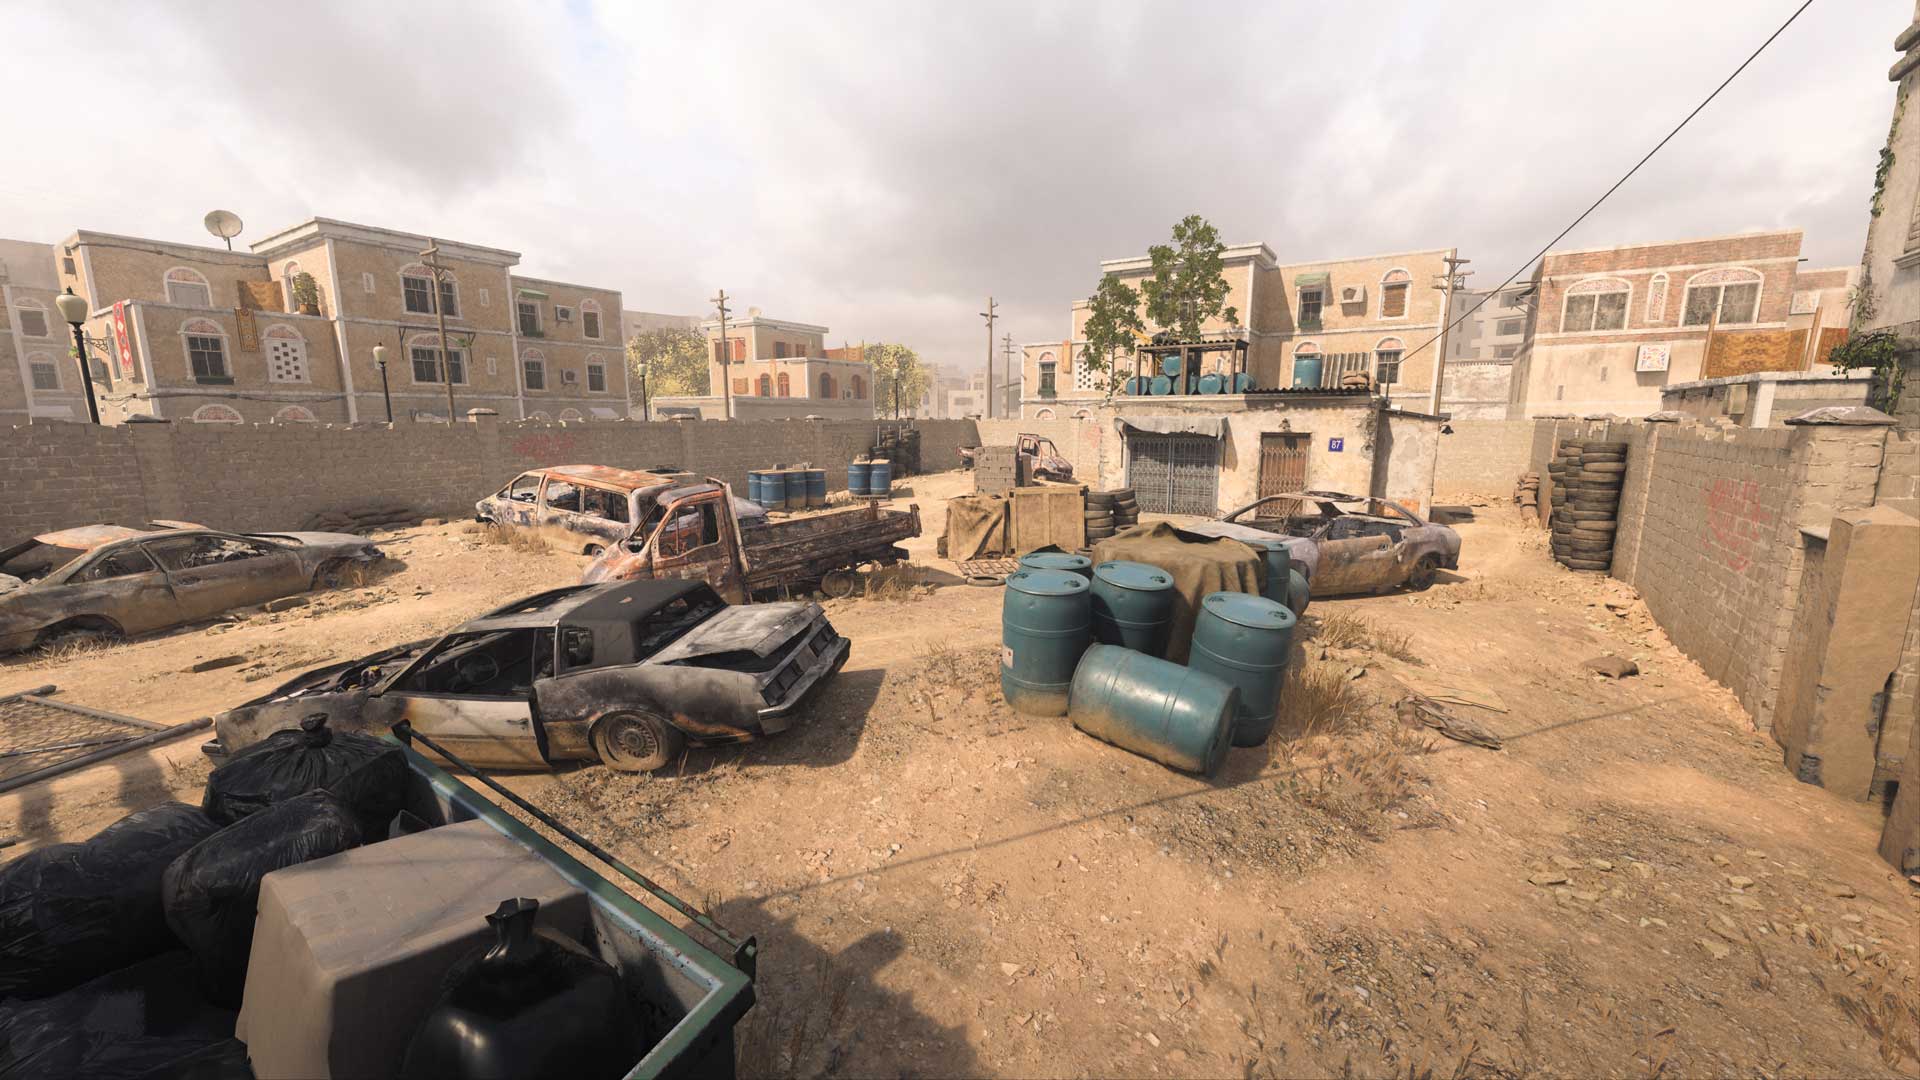 Modern Warfare 2 Brings Back Classic Call of Duty 4 Map